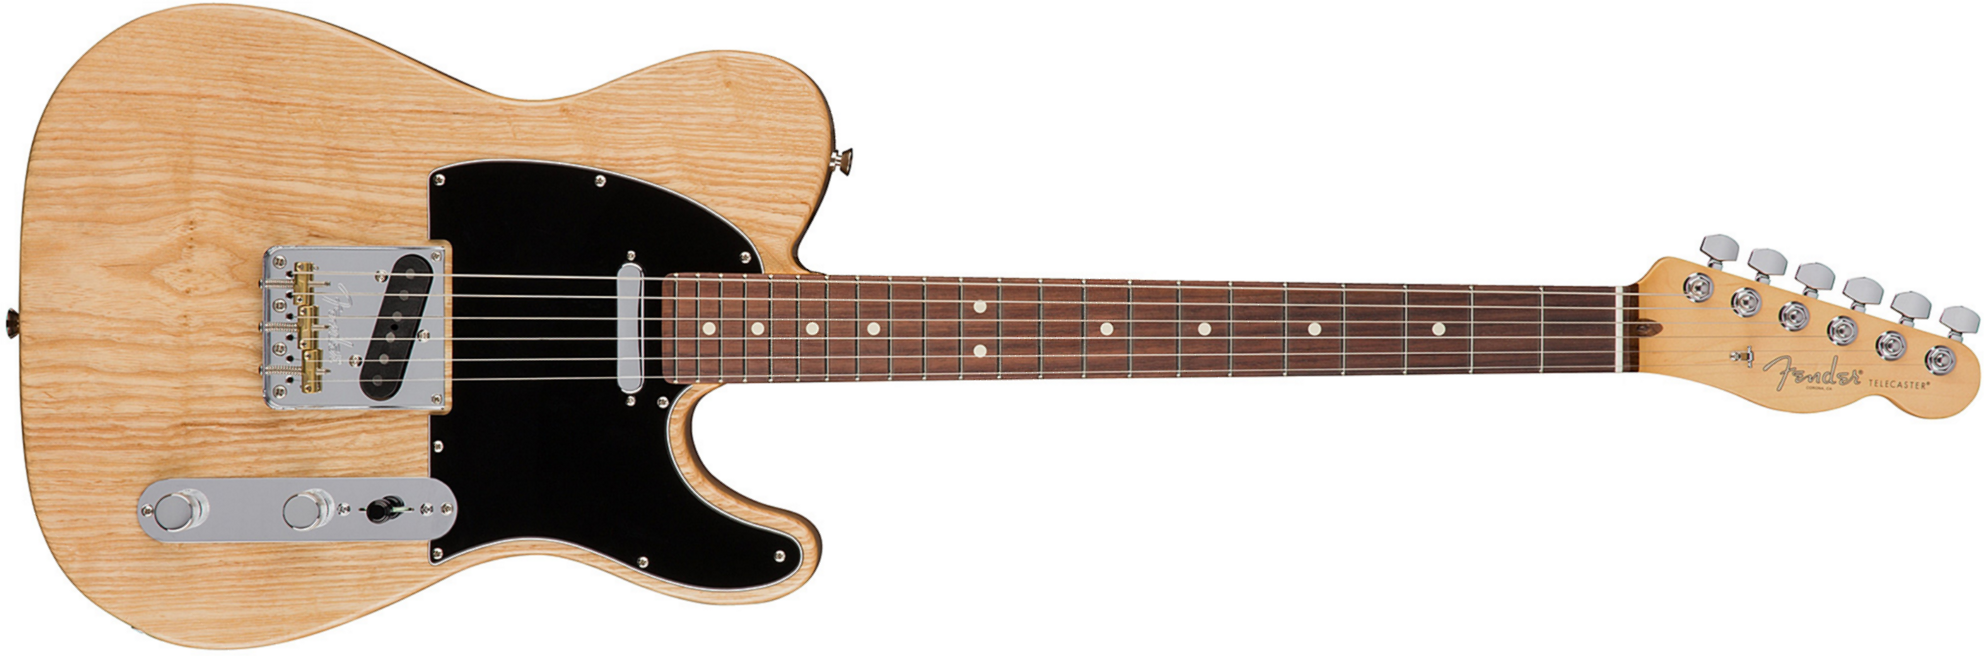 Fender Tele American Professional 2s Usa Rw - Natural - Guitare Électrique Forme Tel - Main picture